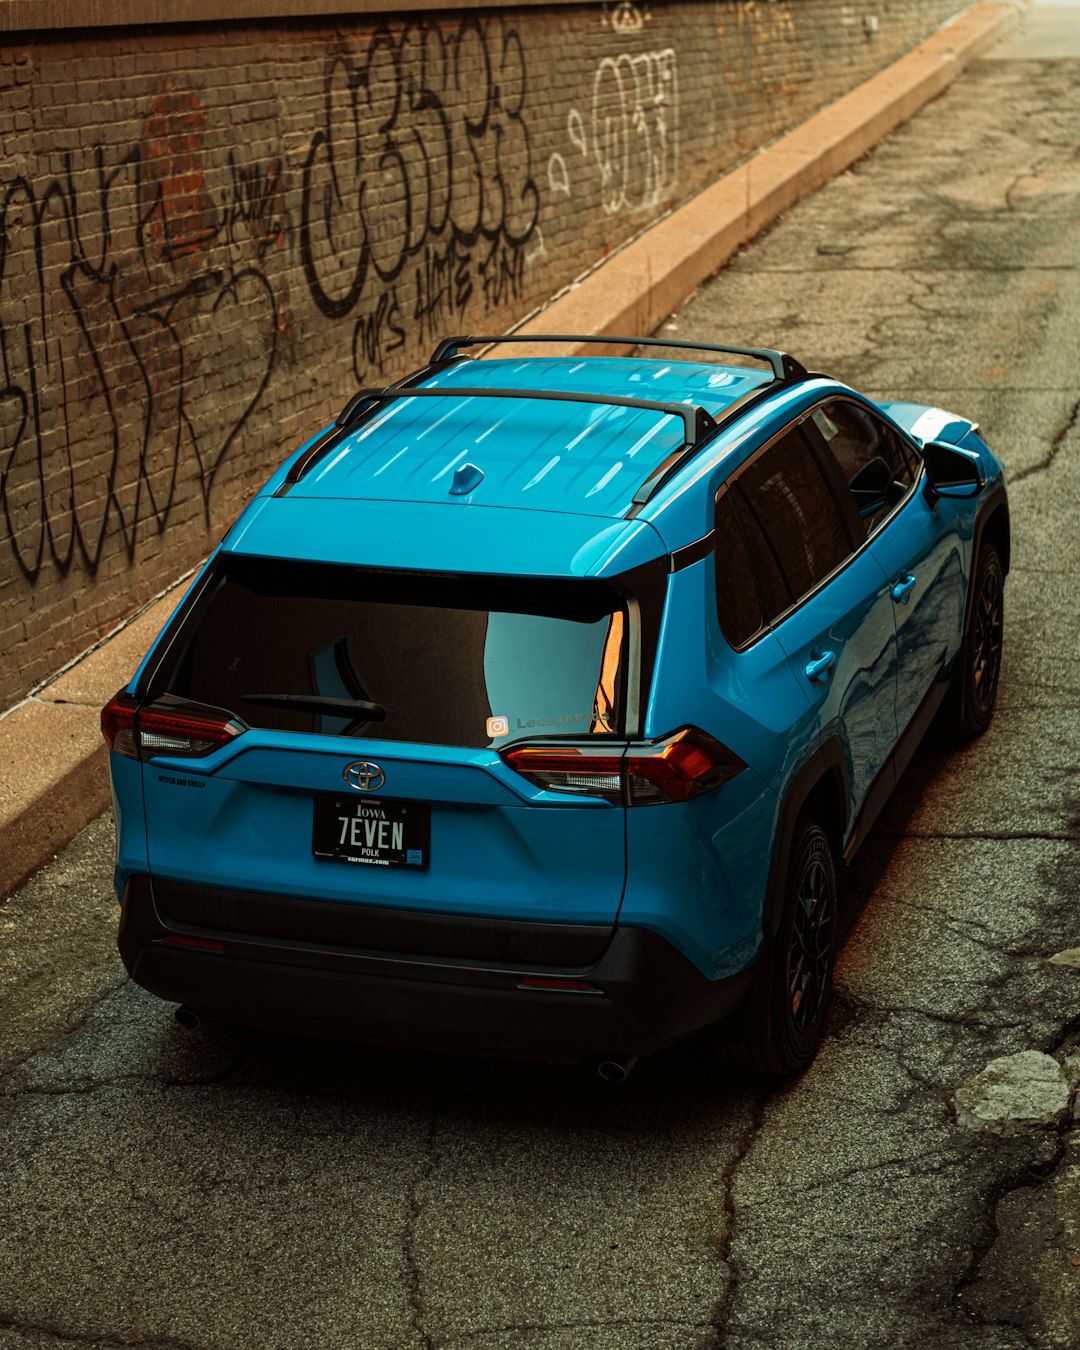 blue honda car parked beside brown brick wall